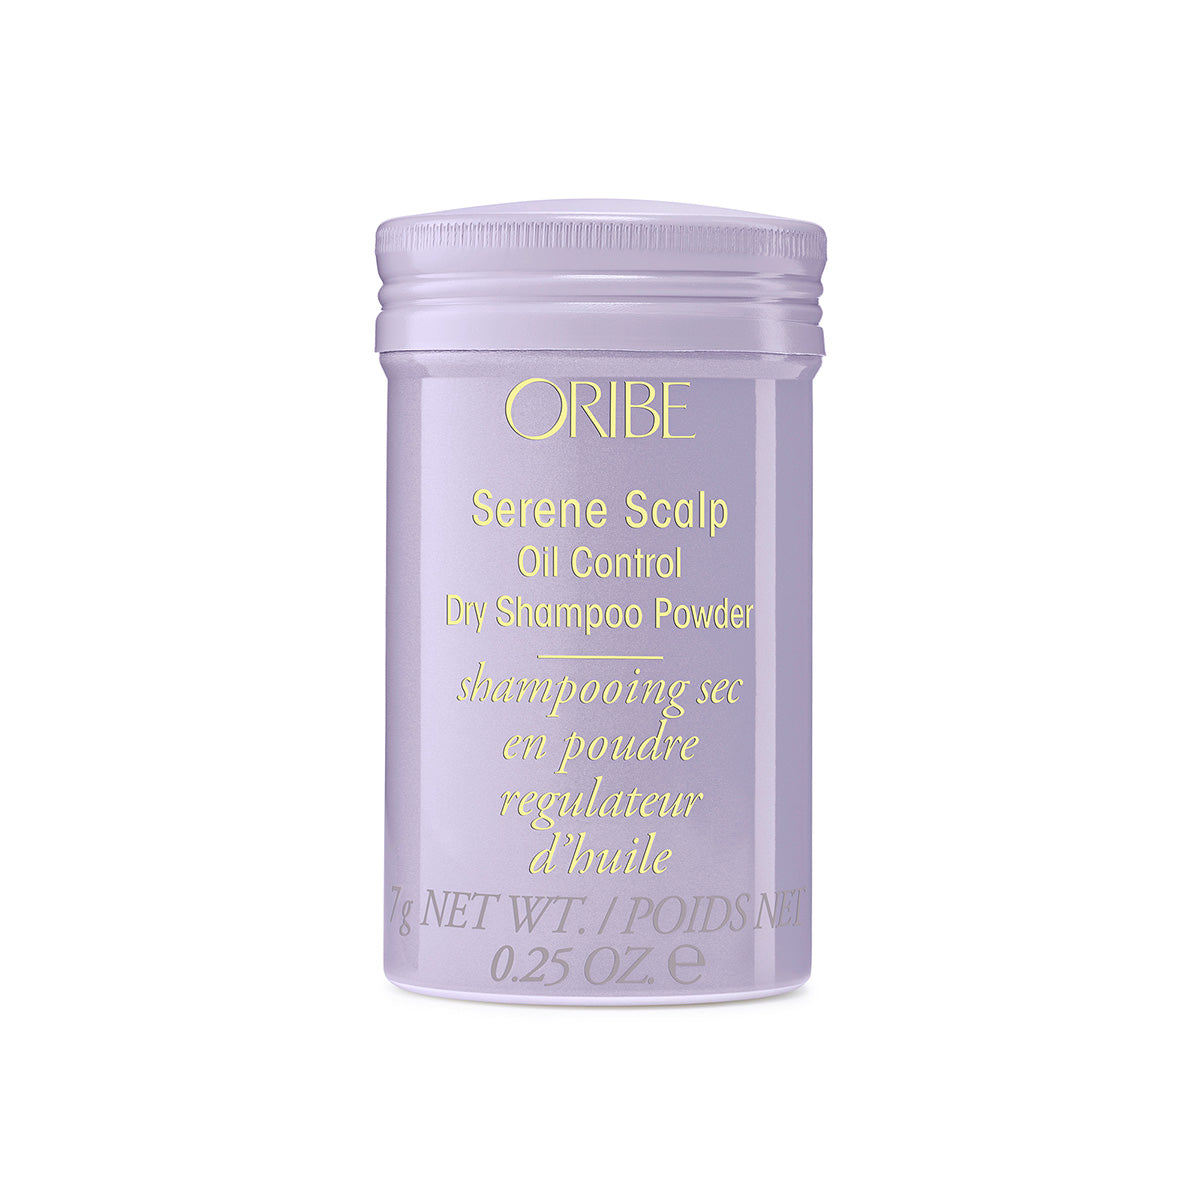 Serene Scalp Oil Control Dry Shampoo Powder Deluxe Sample